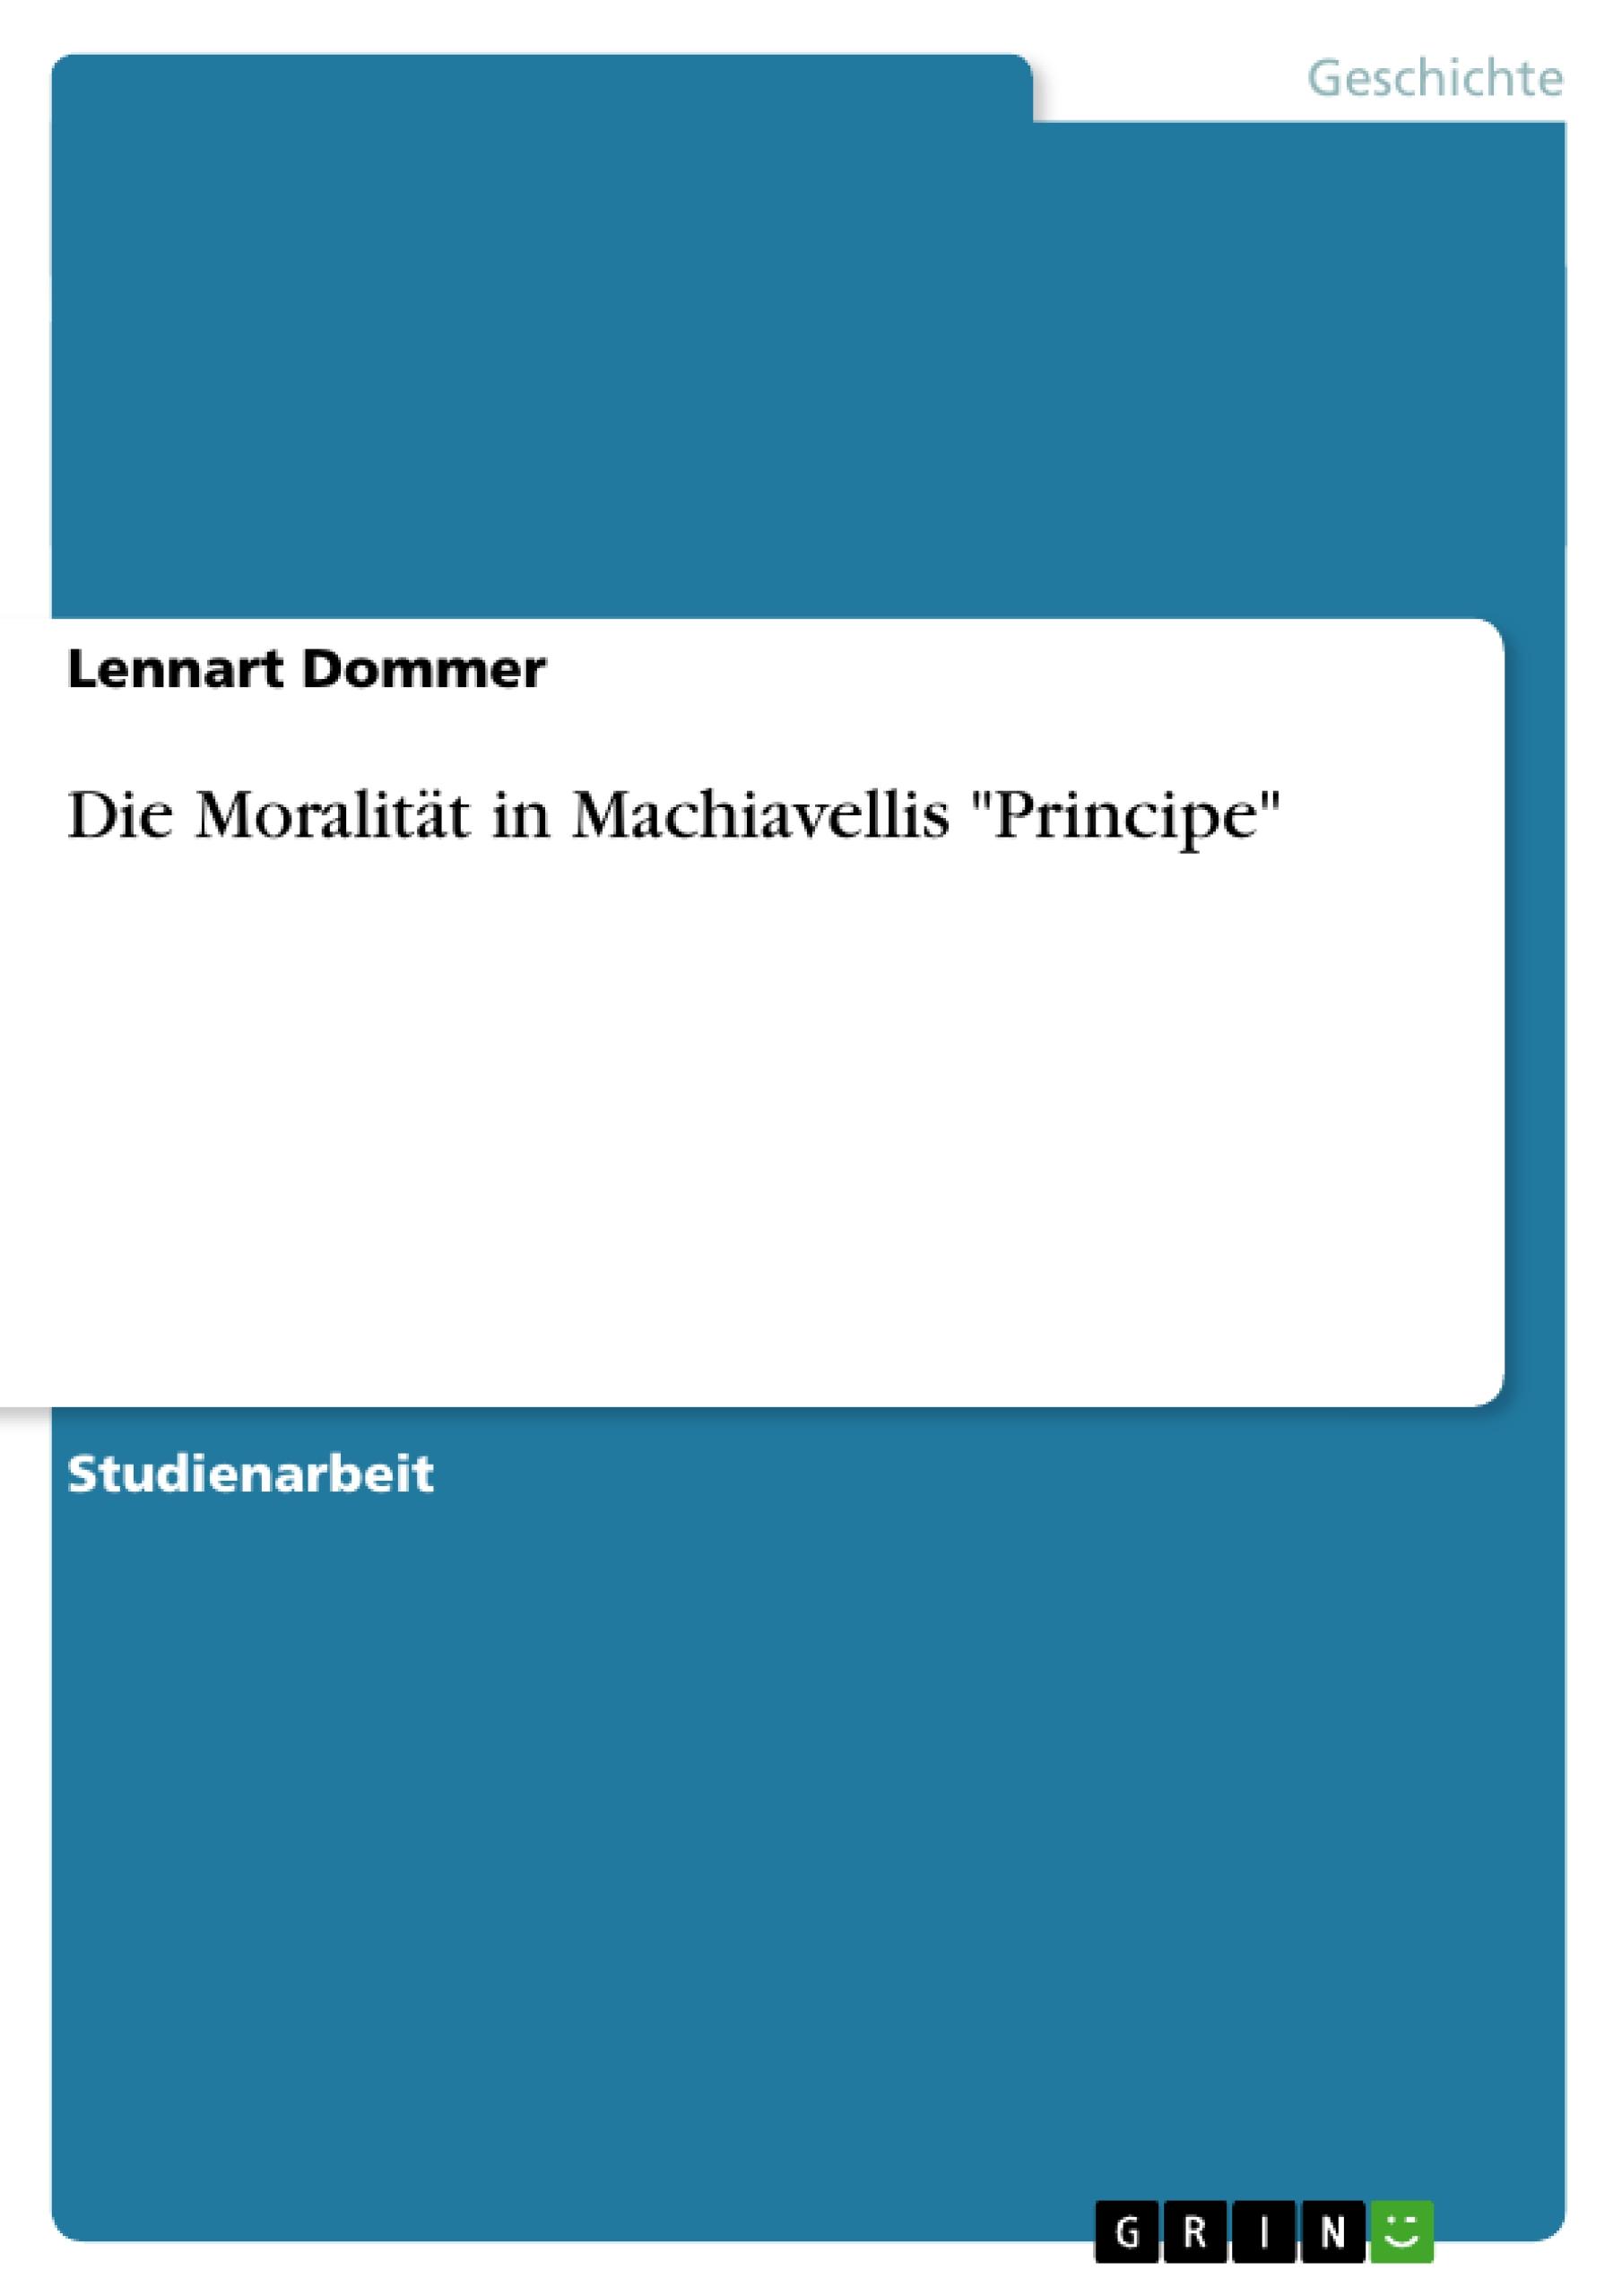 Die Moralitaet in Machiavellis  Principe - Dommer, Lennart